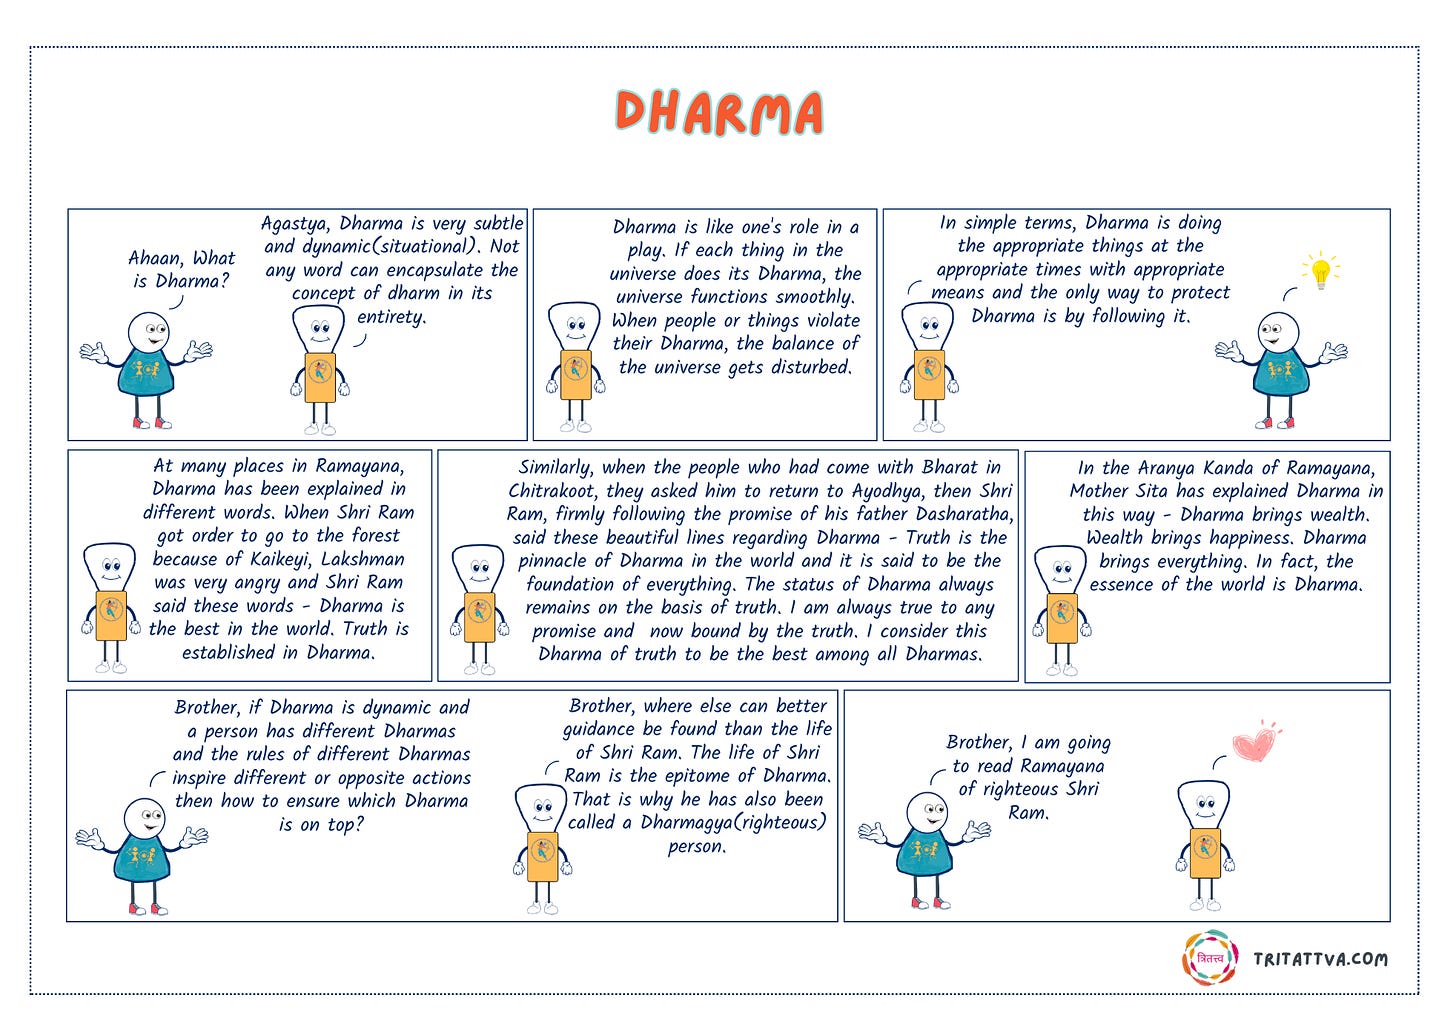 Tritatva's Web comic explaining about Dharma through the context of Ramayana.